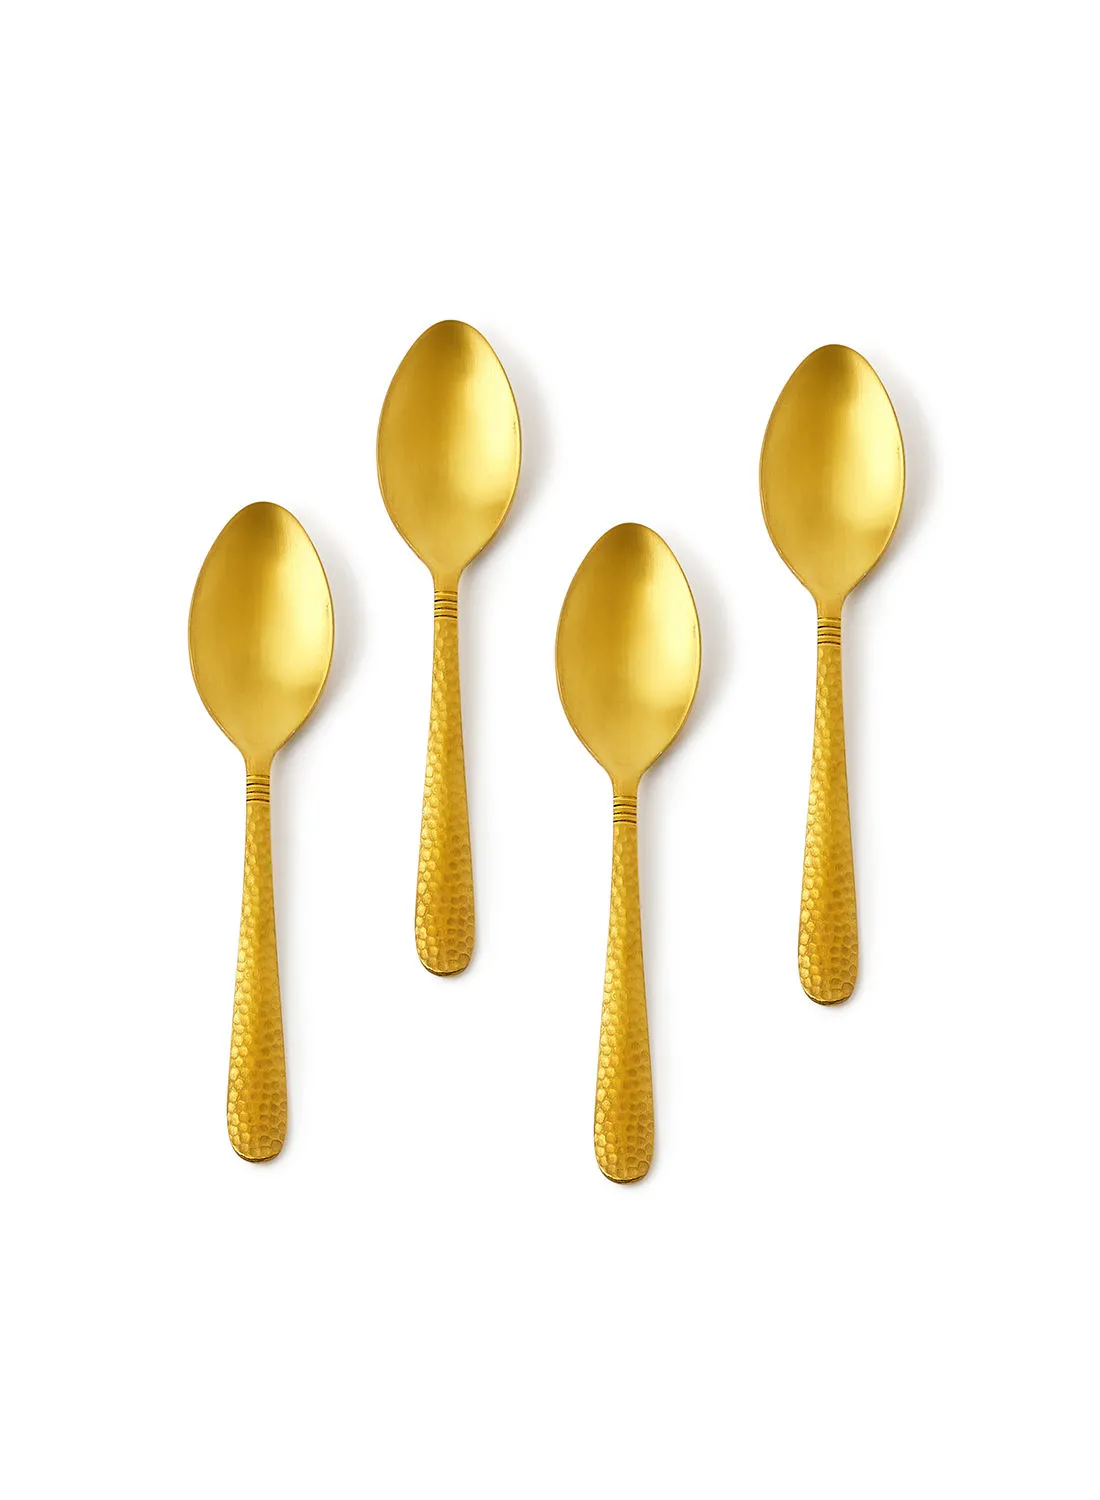 Amal 4 Piece Teaspoons Set - Made Of Stainless Steel - Silverware Flatware - Spoons - Spoon Set - Tea Spoons - Serves 4 - Design Gold Aster